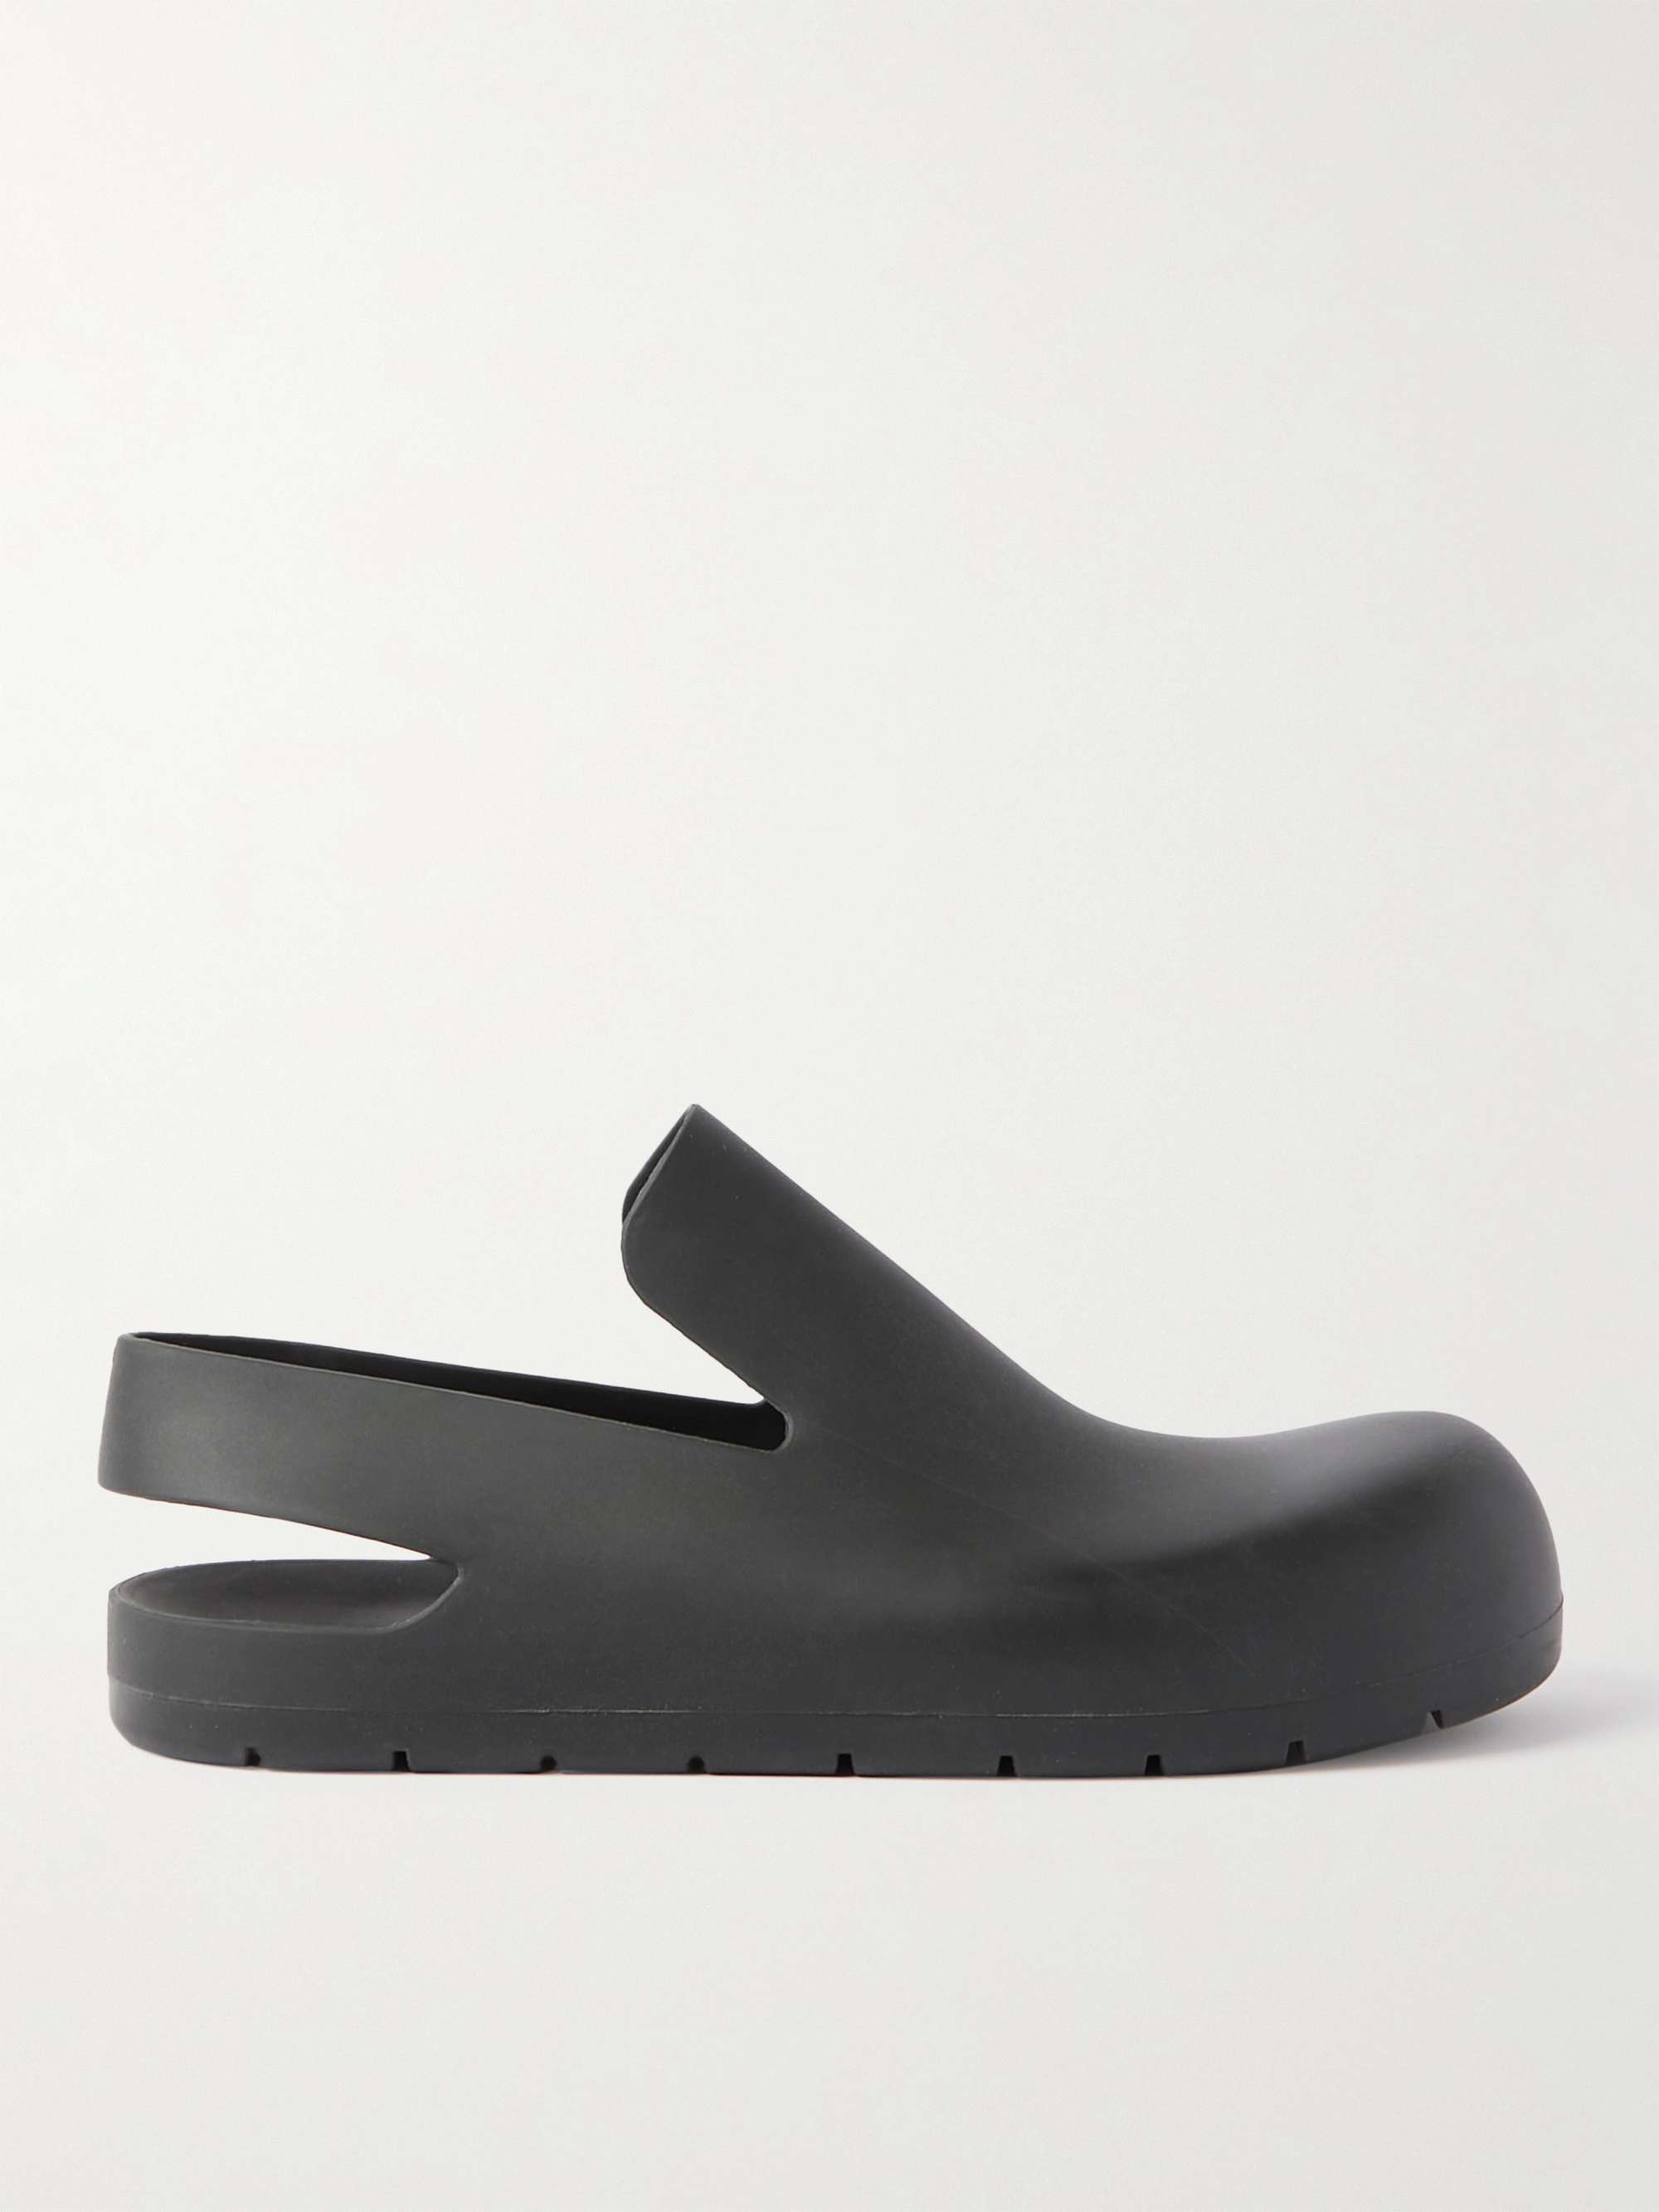 KaLI_store Mens Shoes Men's Beach Sandals, Quick-Dry Flip-Flop Slides,  Water Resistant & Wet Grip Rubber Soles, Compression Molded Footbed &  Soft,Blue - Walmart.com